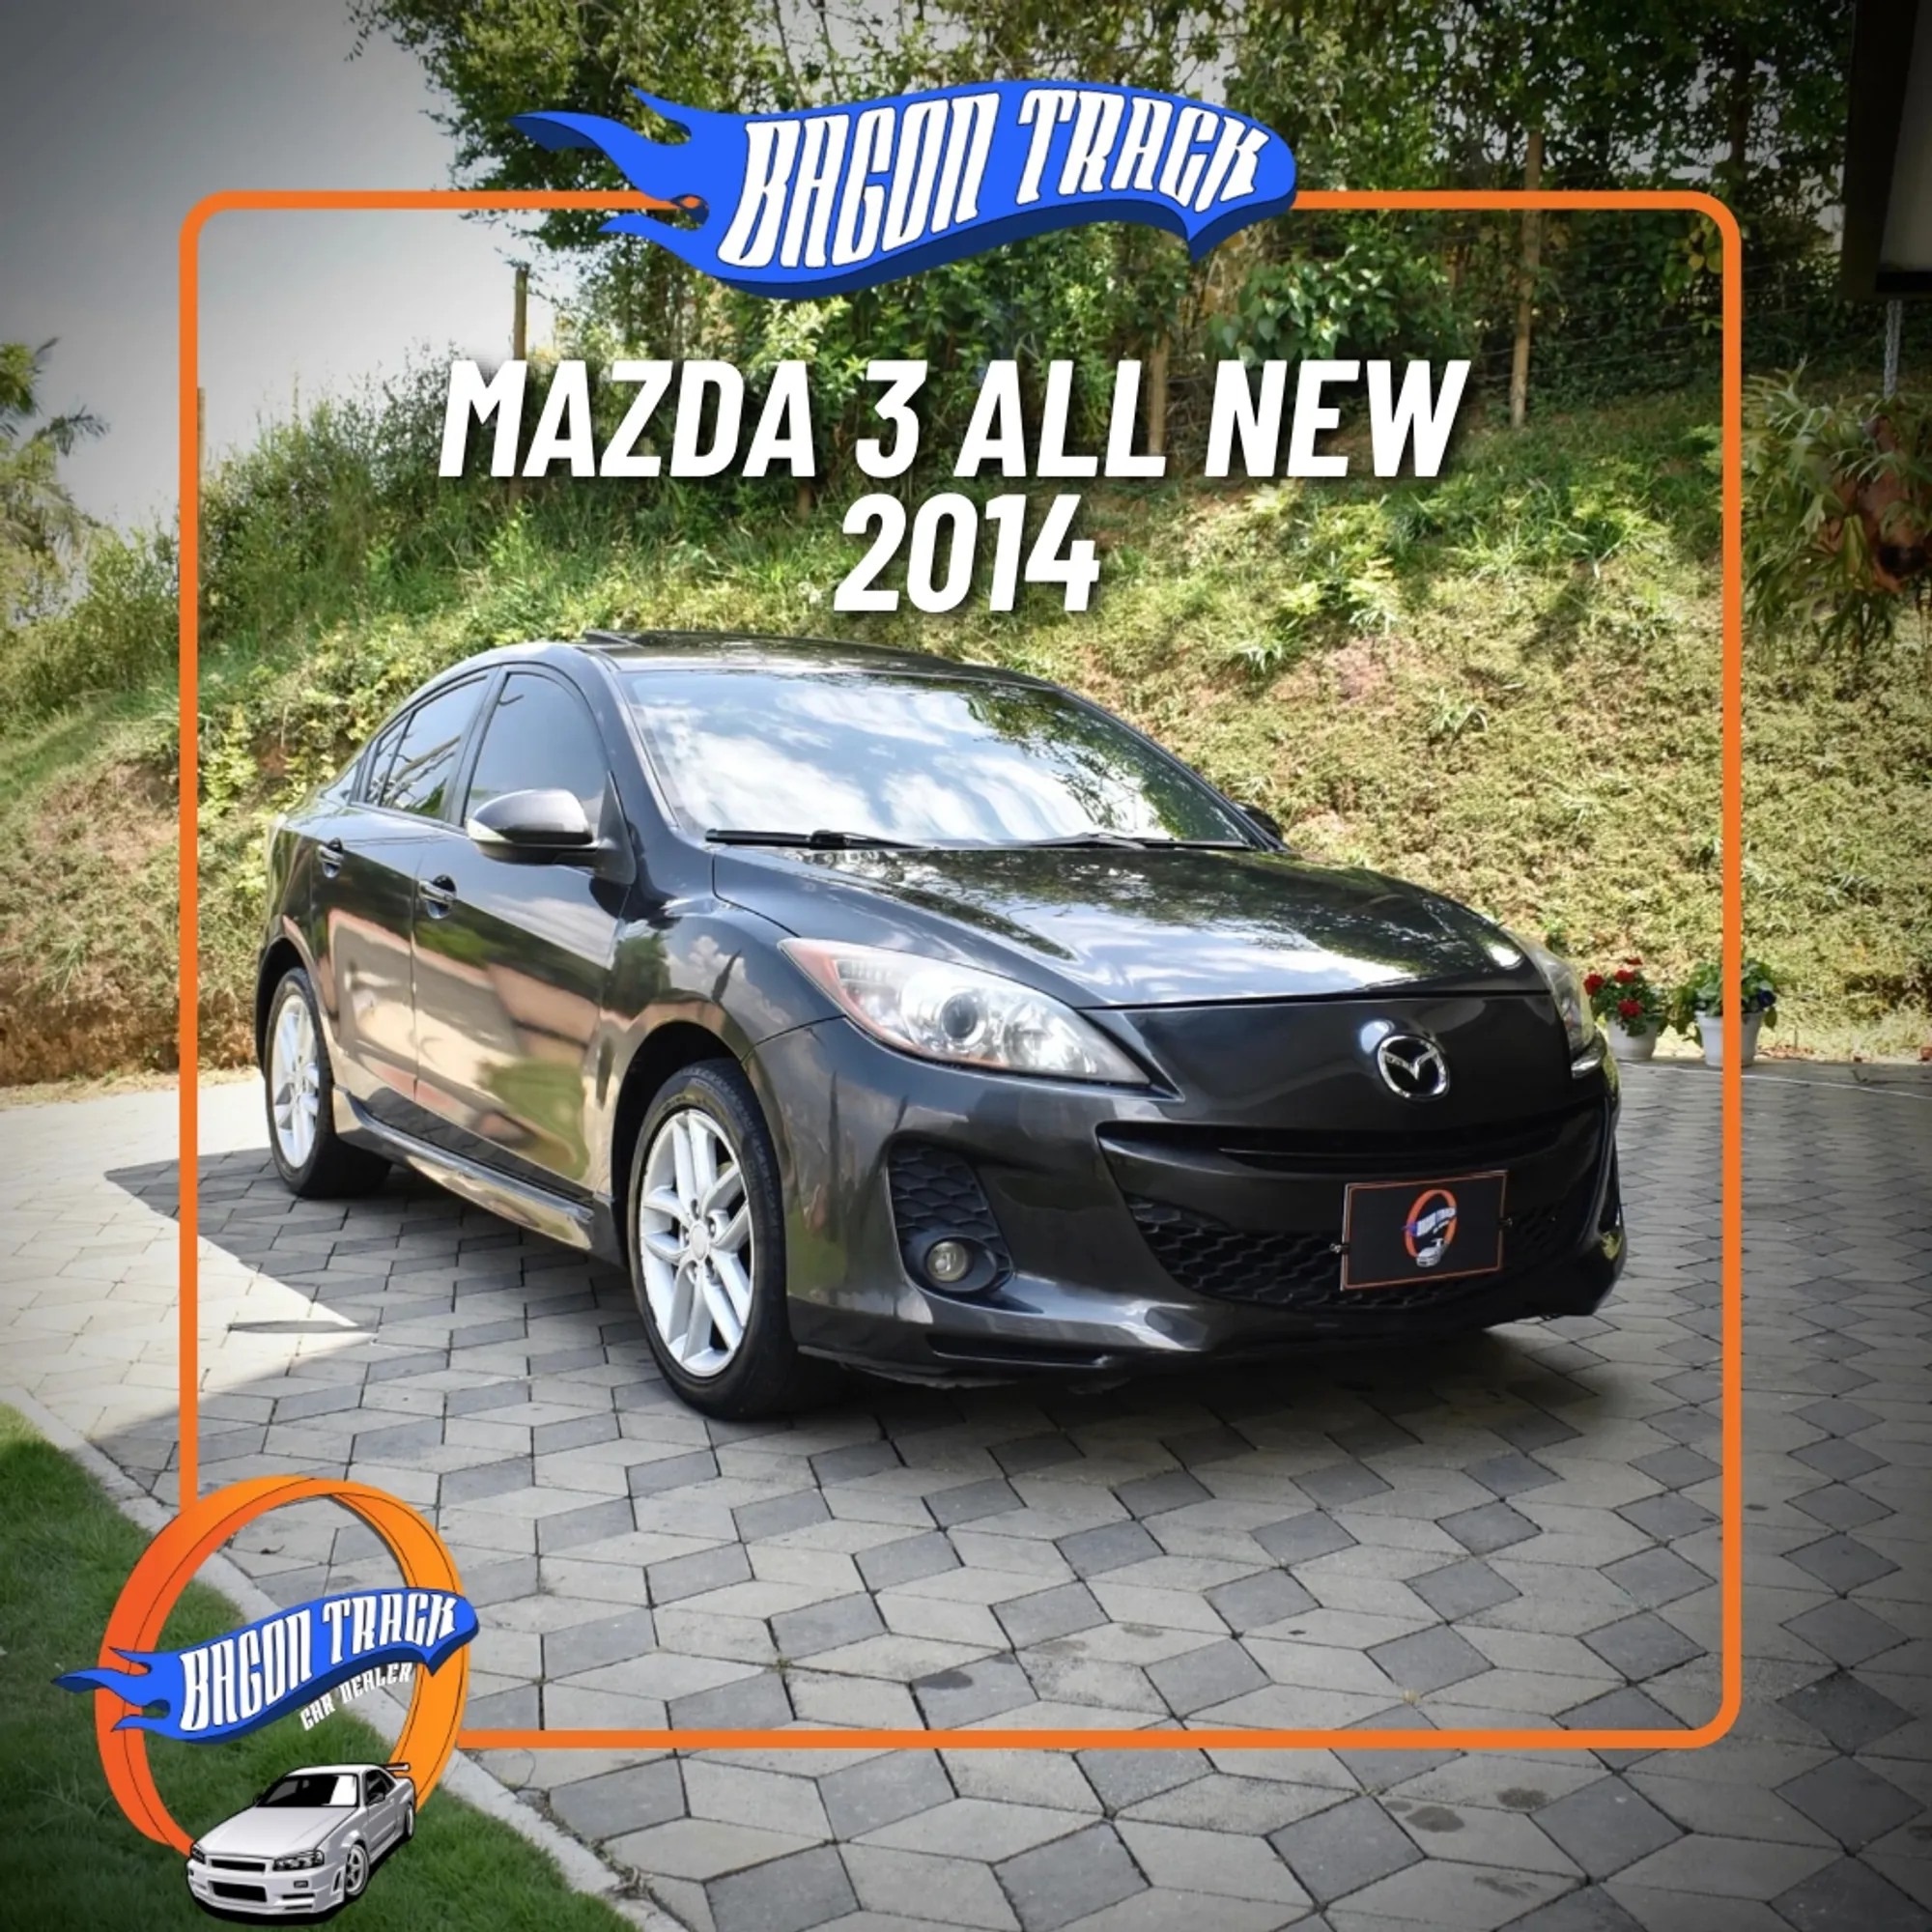 Mazda 3 all new 2014